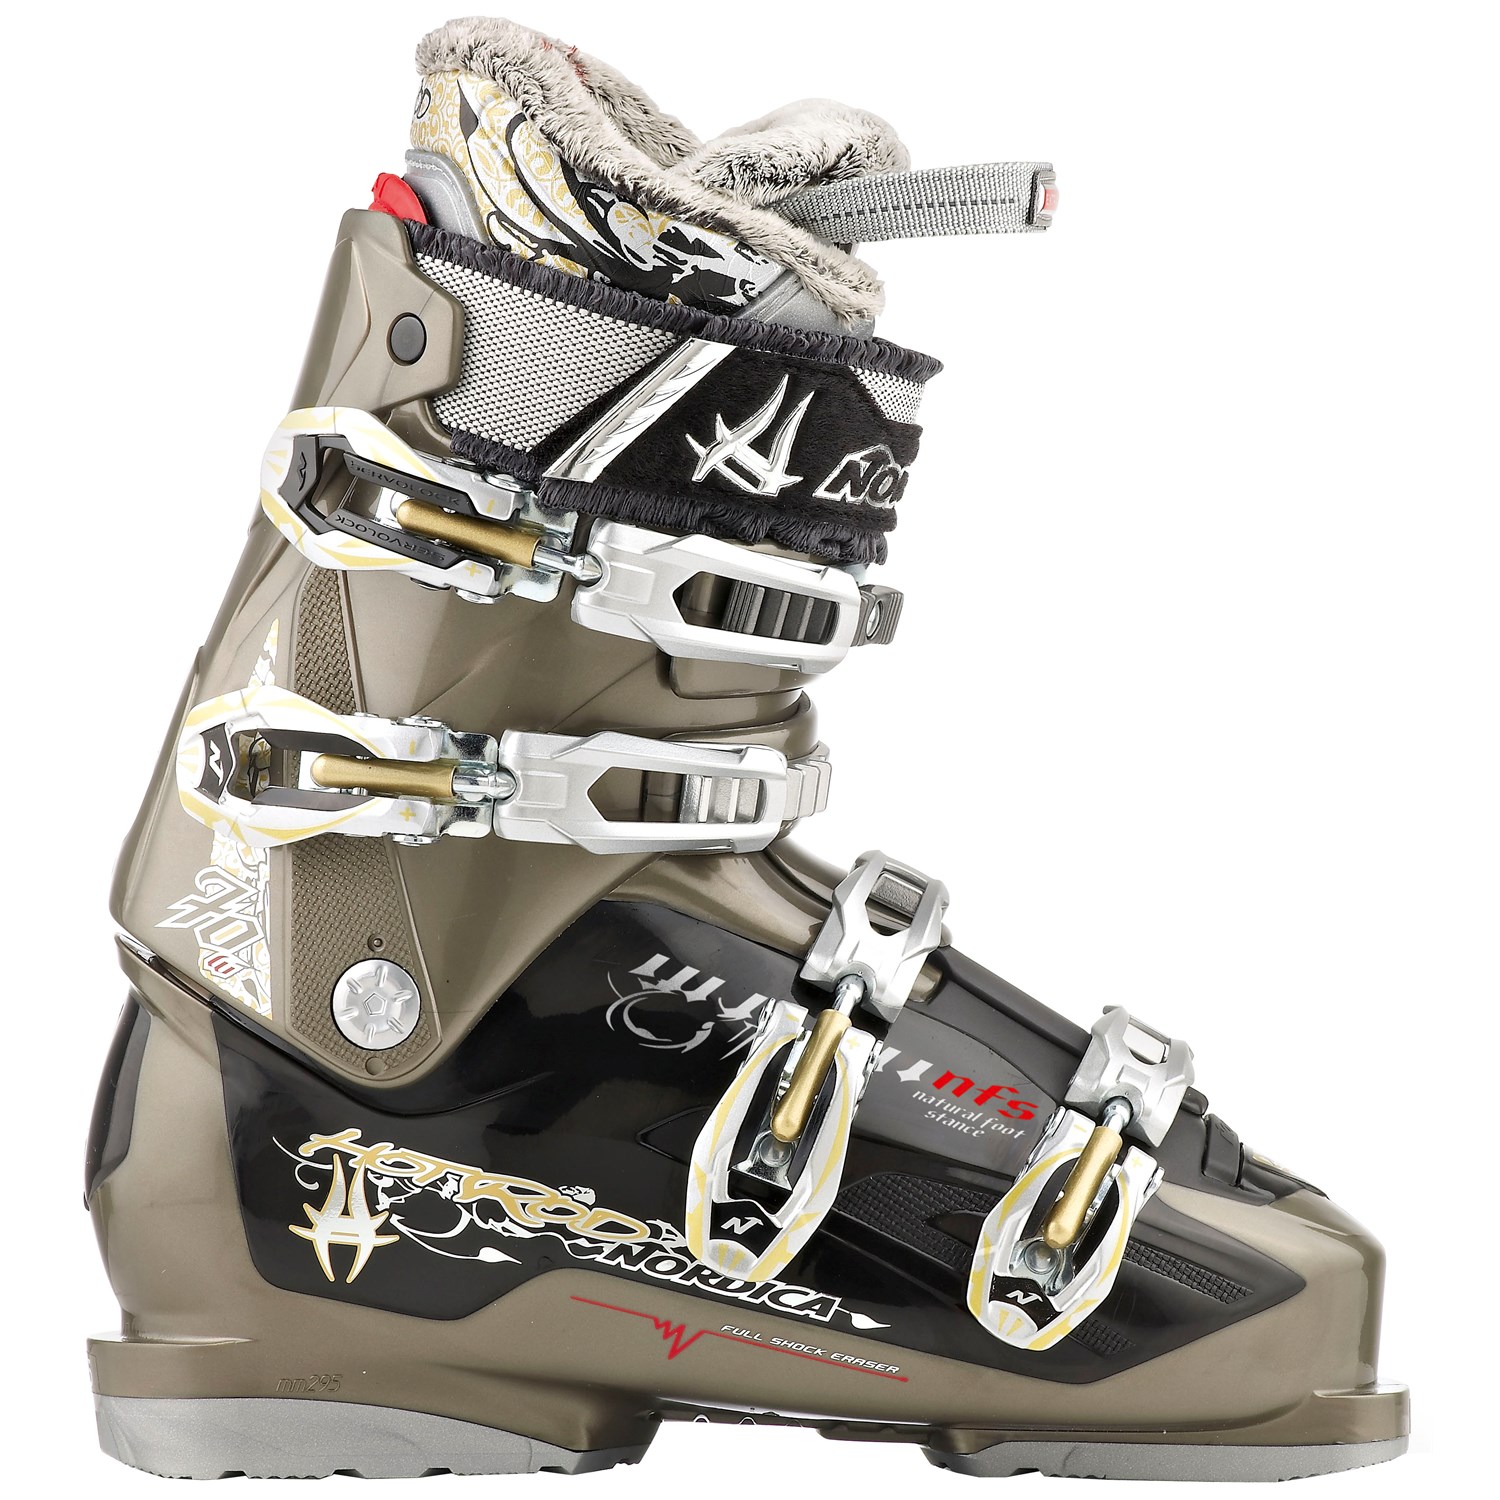 Nordica Hot Rod 70 W Ski Boots - Women's 2011 | evo